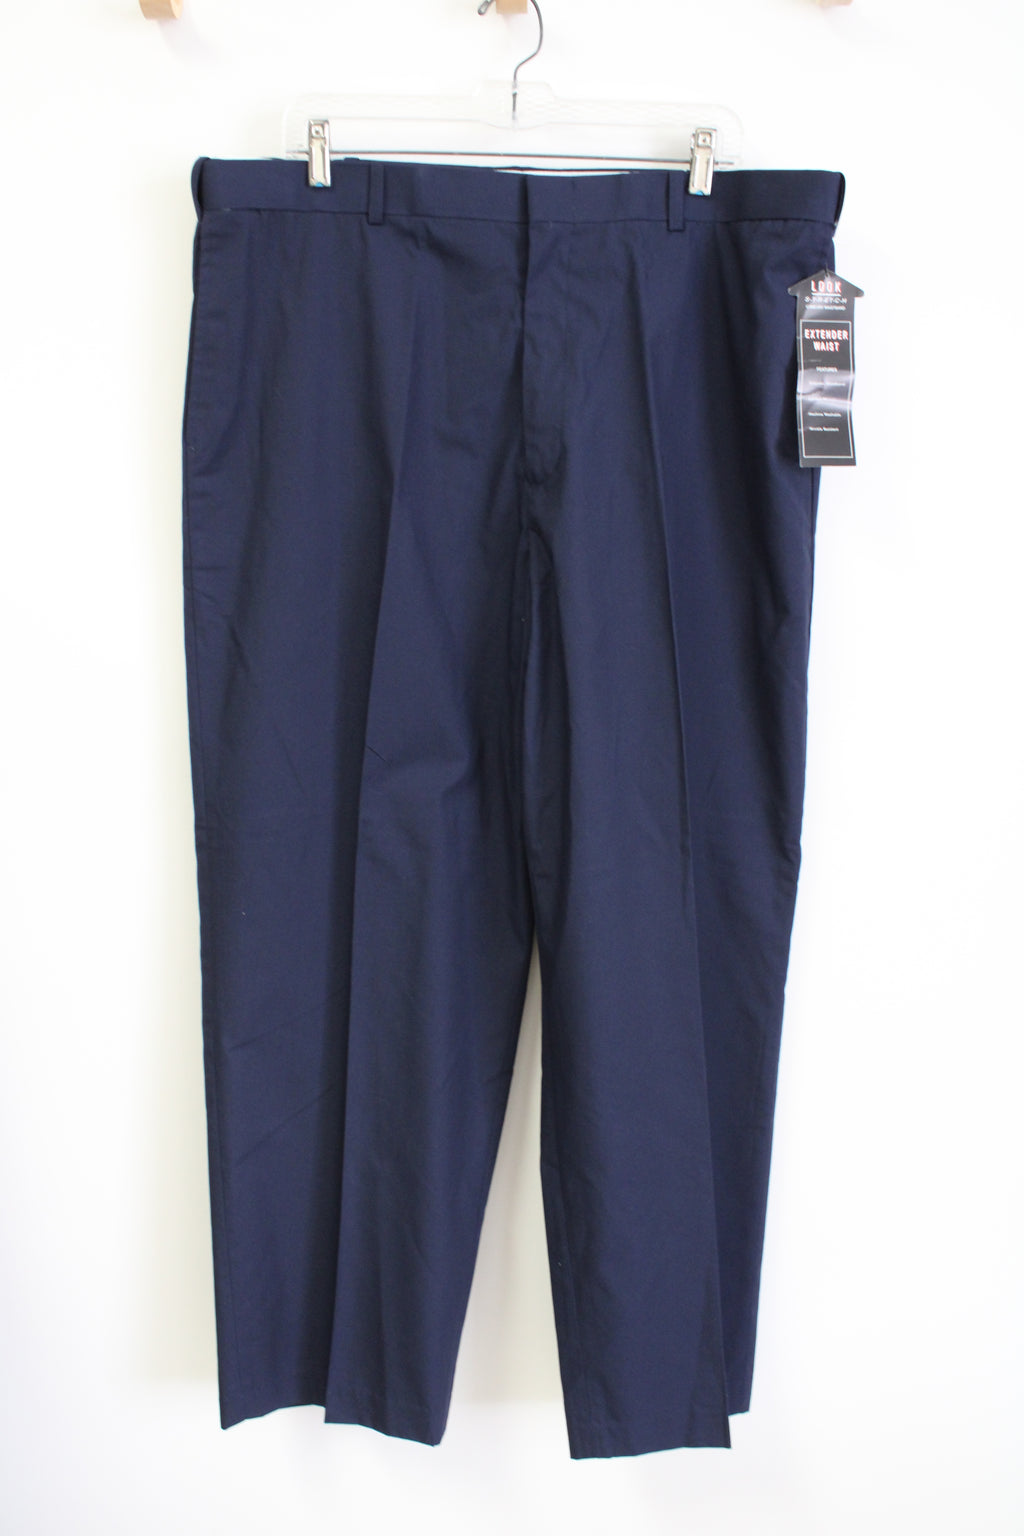 NEW Cross & Windsor Navy Blue Stretch Comfort Waistband Pants | 40X29